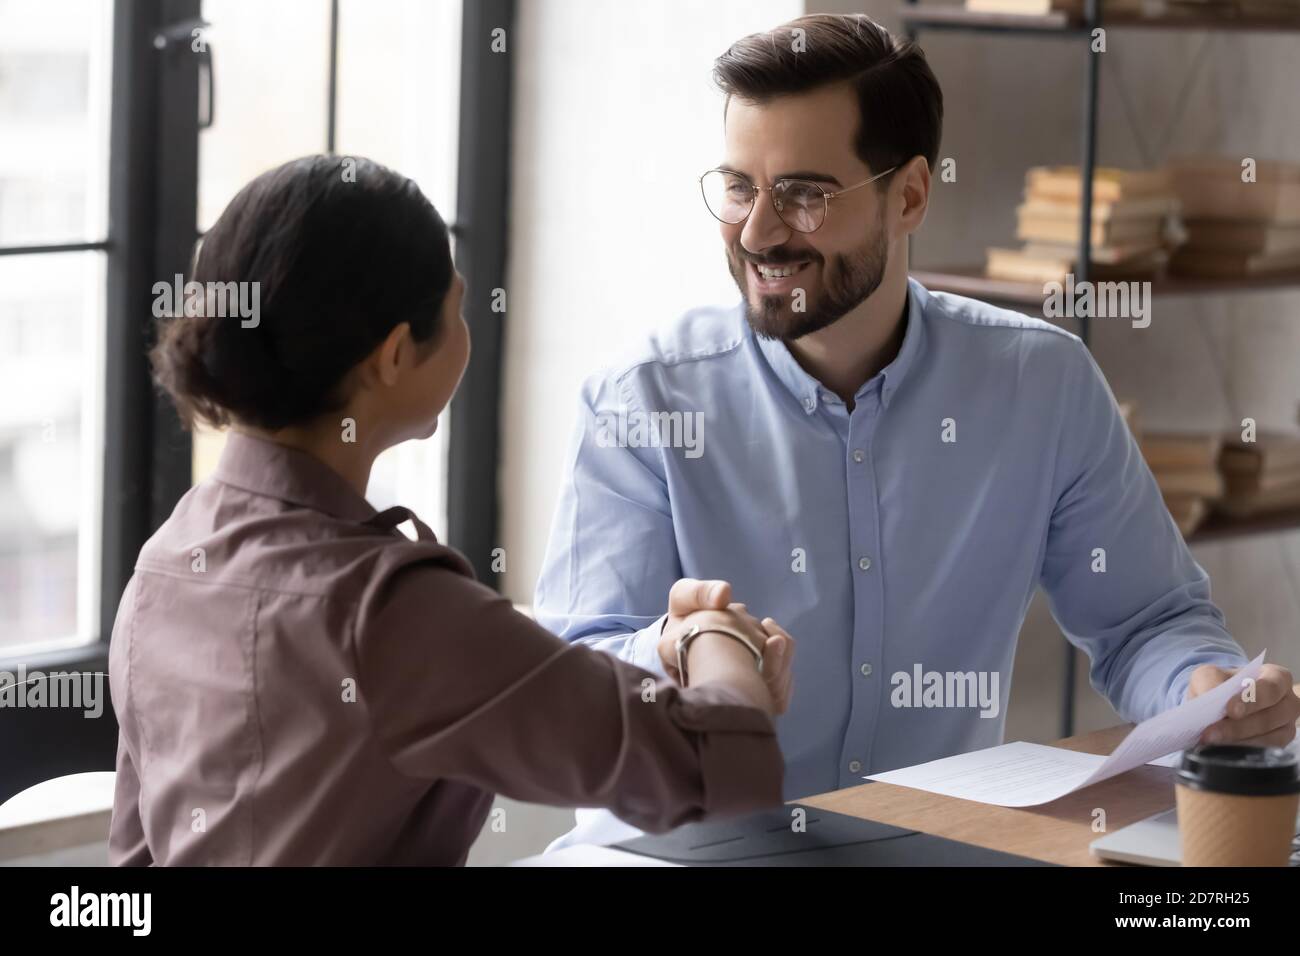 Smiling diverse businesspeople handshake greeting at meeting Stock Photo